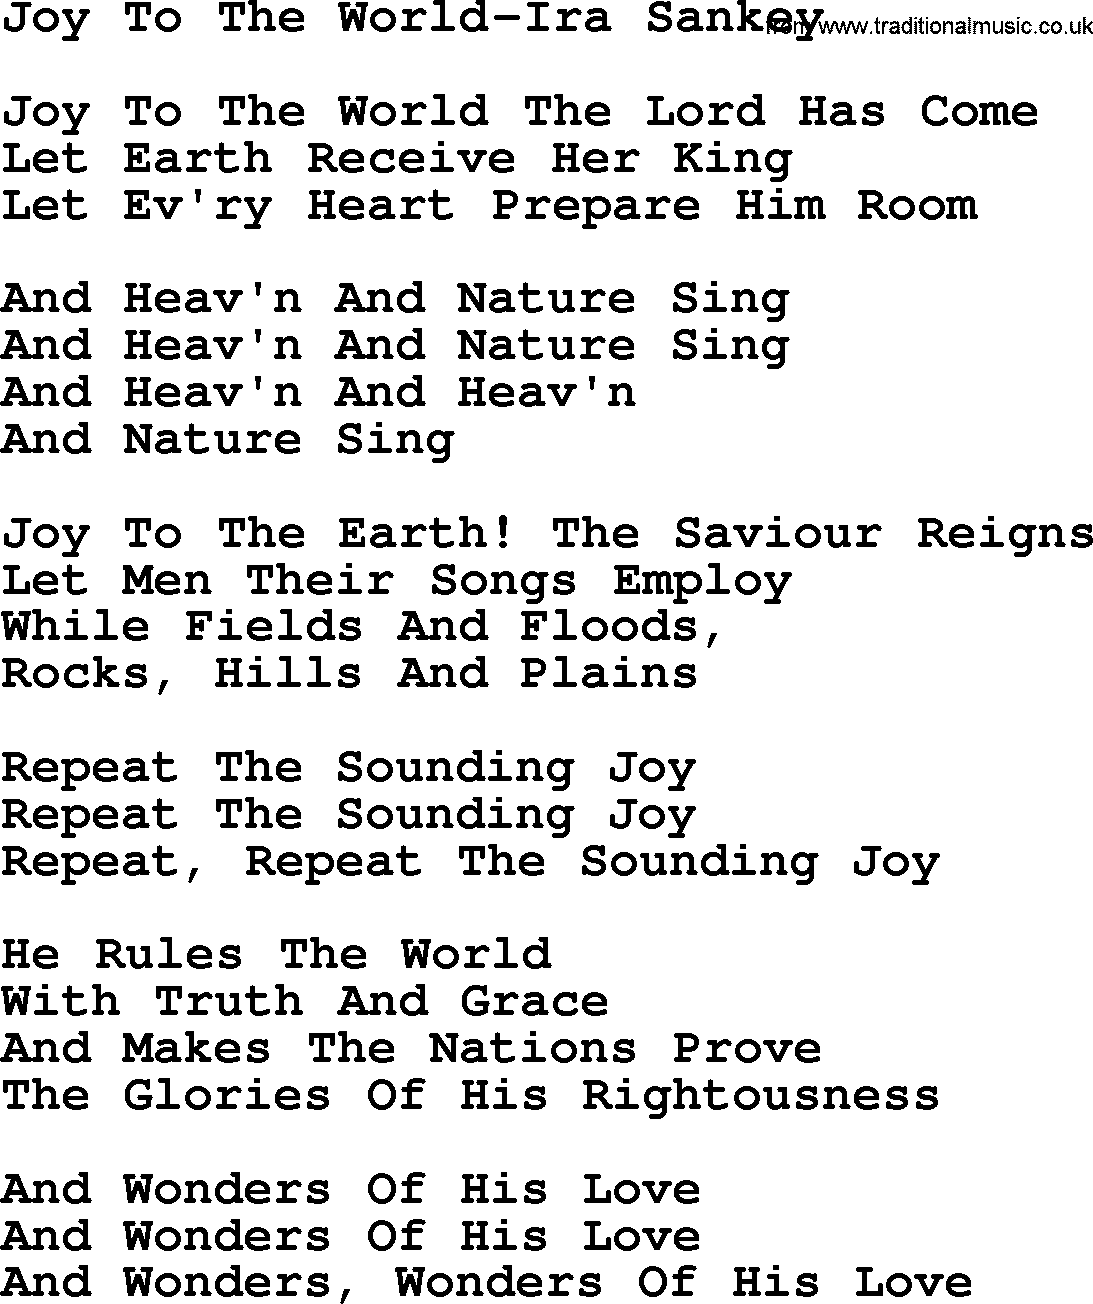 Ira Sankey hymn: Joy To The World-Ira Sankey, lyrics